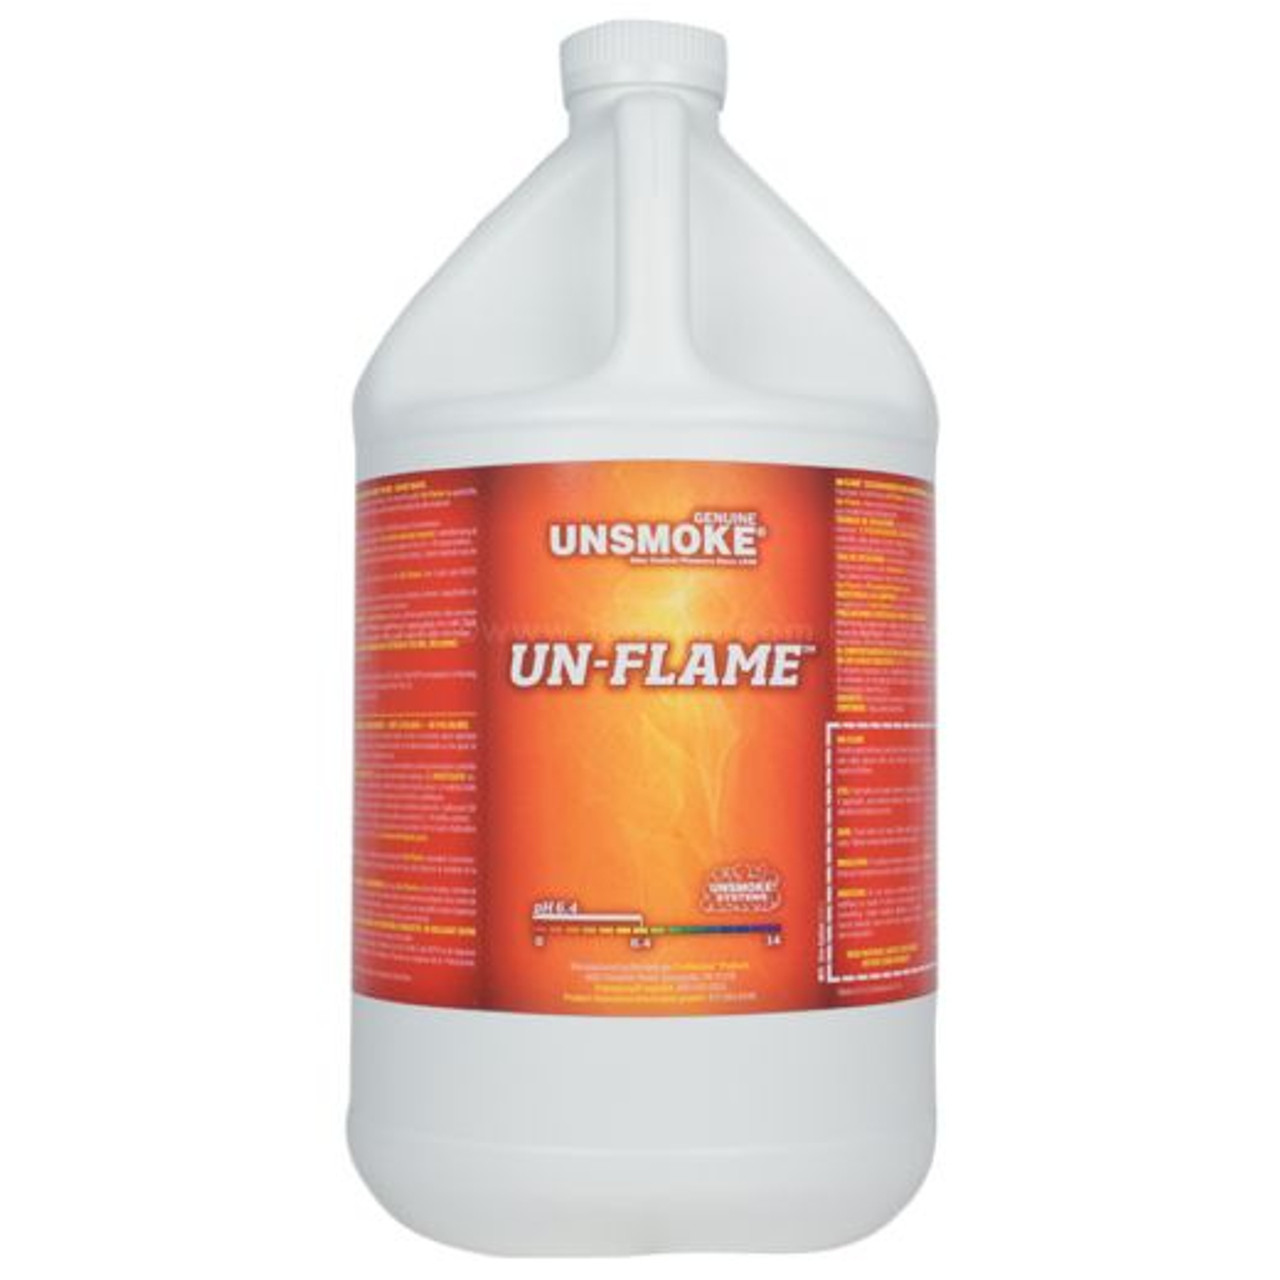 Unsmoke Un-Flame - 1gal - CASE of 4ea